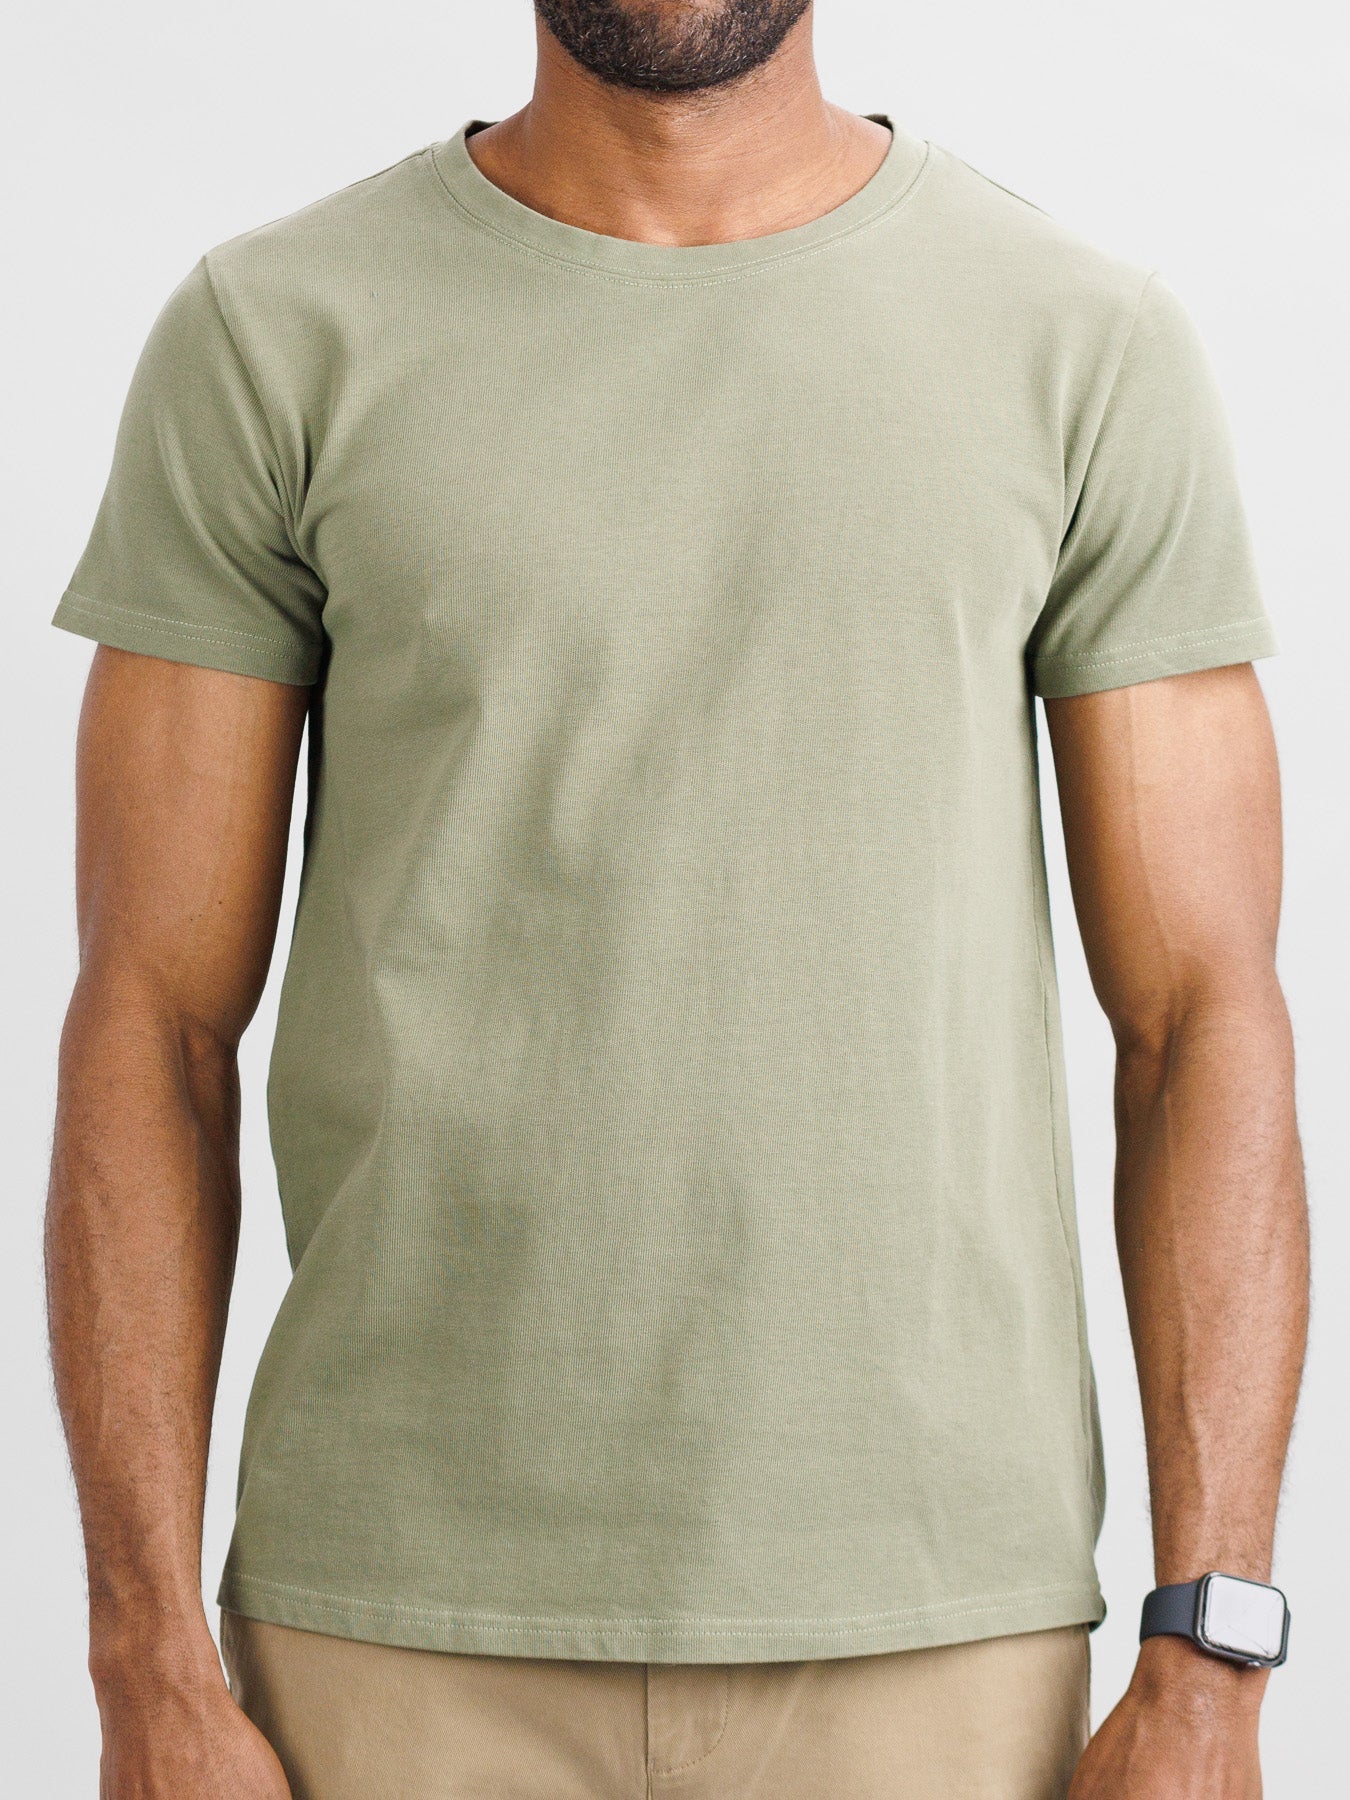 City Organic Cotton T-Shirt